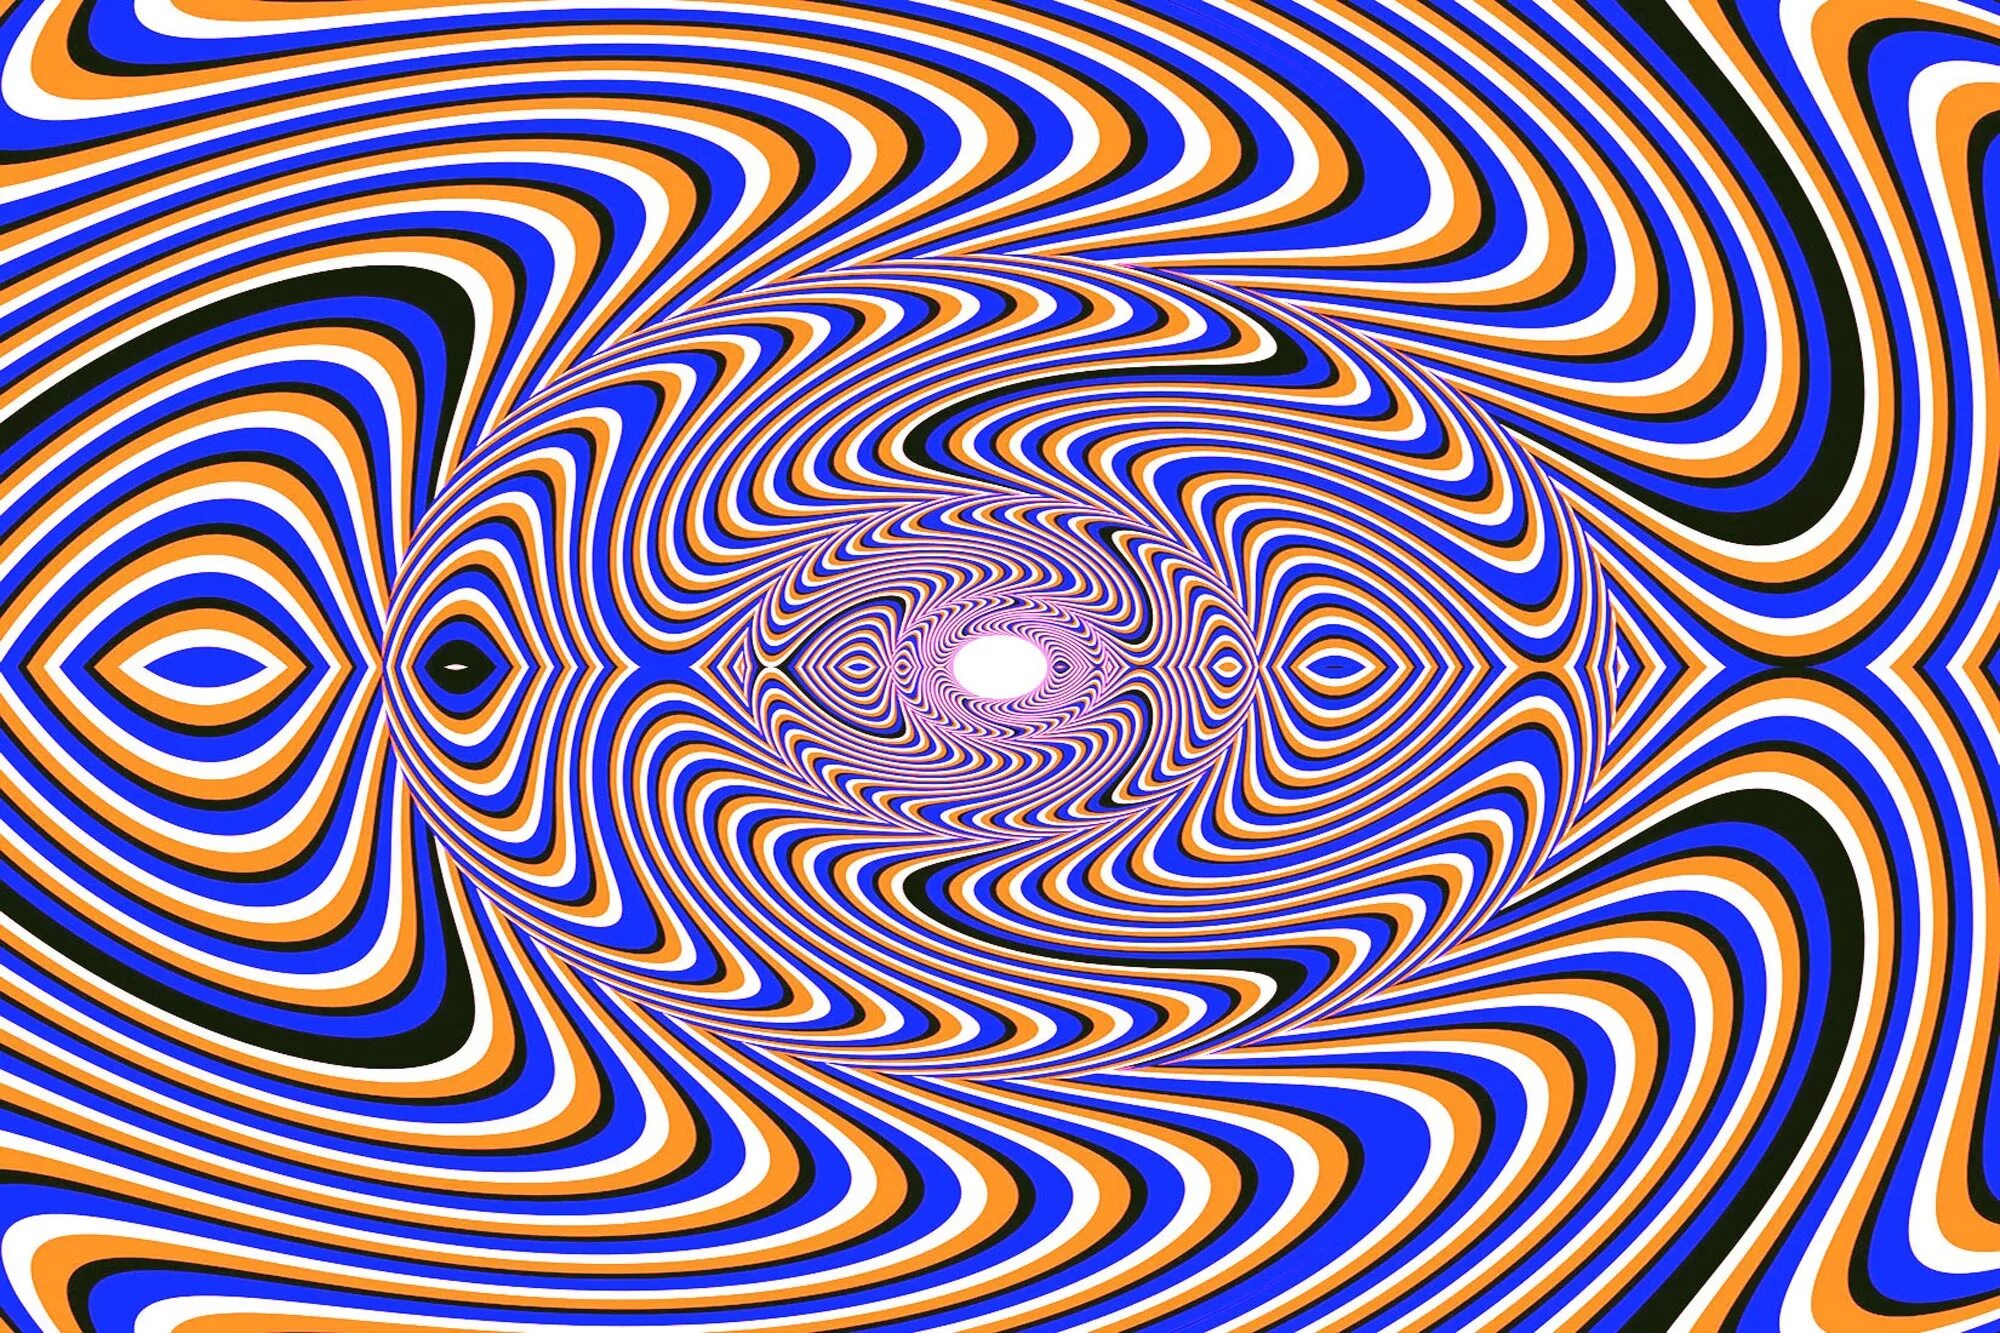 Иллюзии оптический обман. «Оптические иллюзии» (Автор Джейкобс ПЭТ). Оптикал Иллюжн. Иллюзия. Обман зрения.